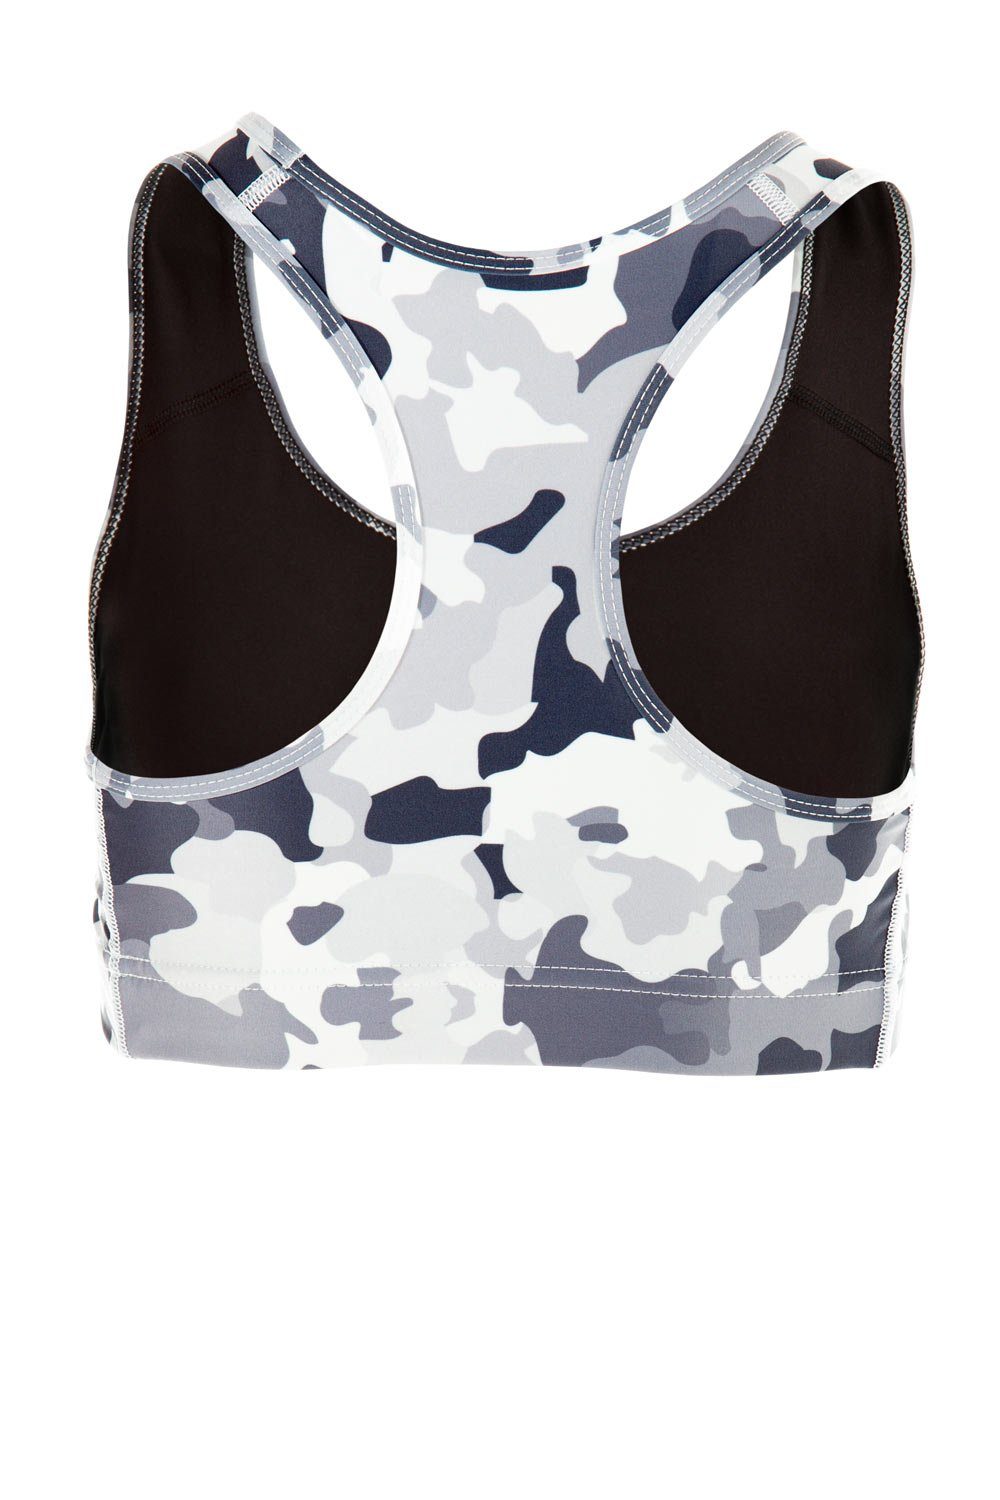 Winshape Sport-Bustier SB101-Military camo white Military-Print